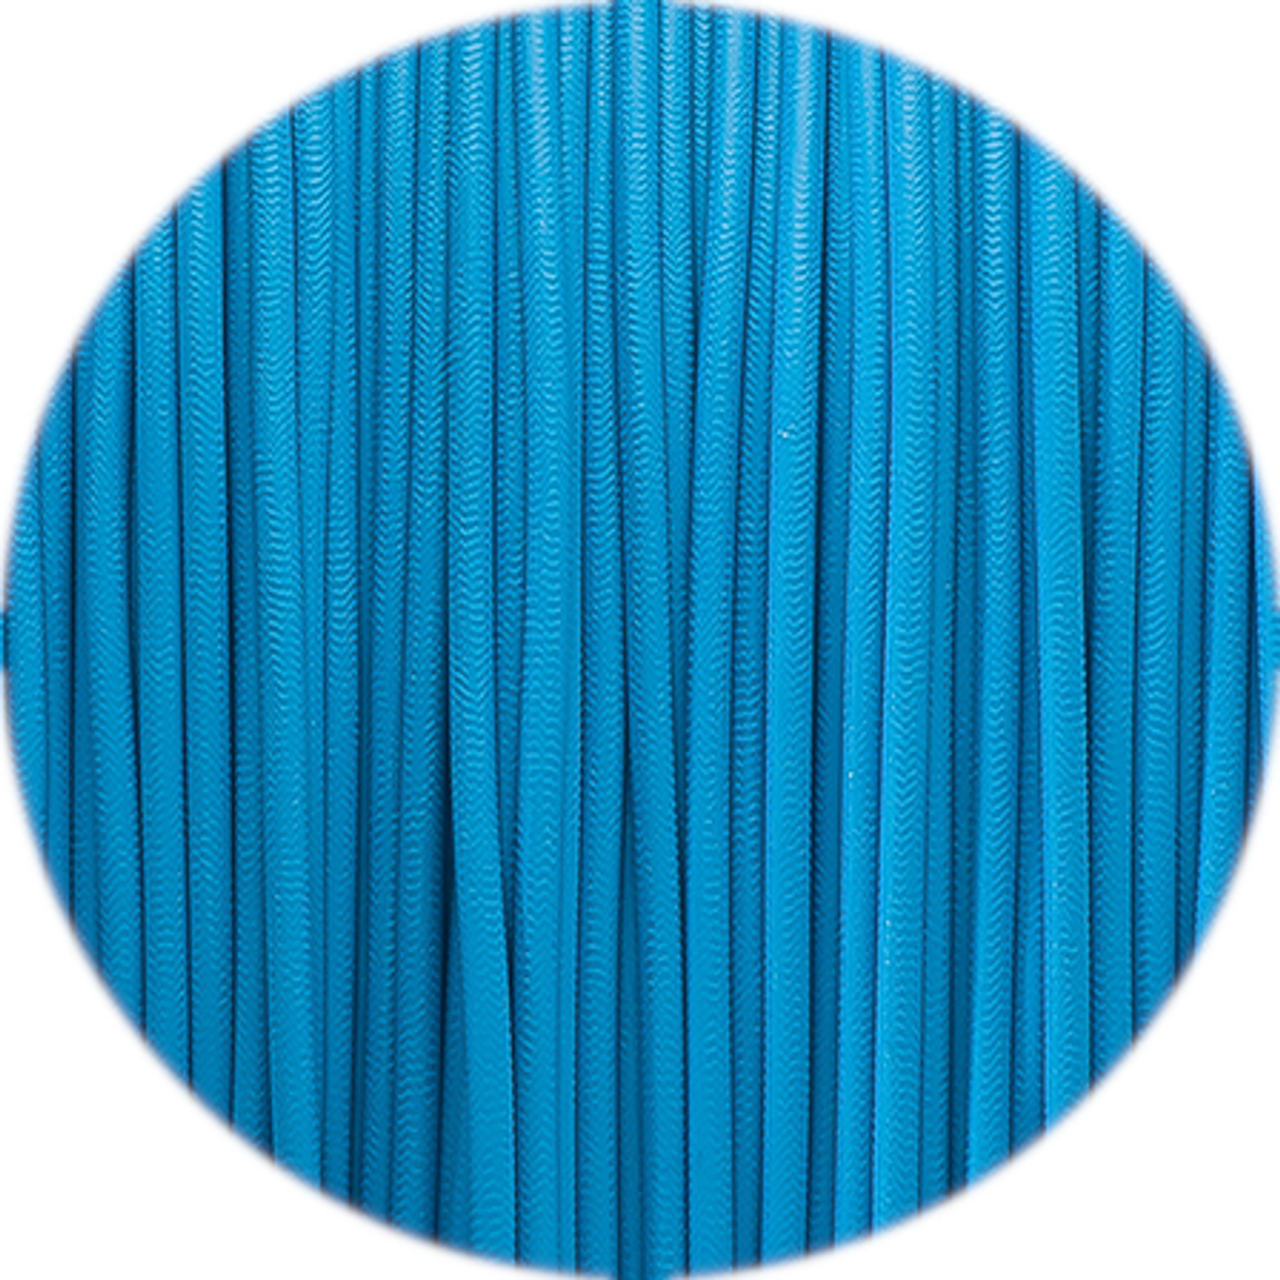 Fiberlogy Fiberflex 40D Blue 3D Printing Filament